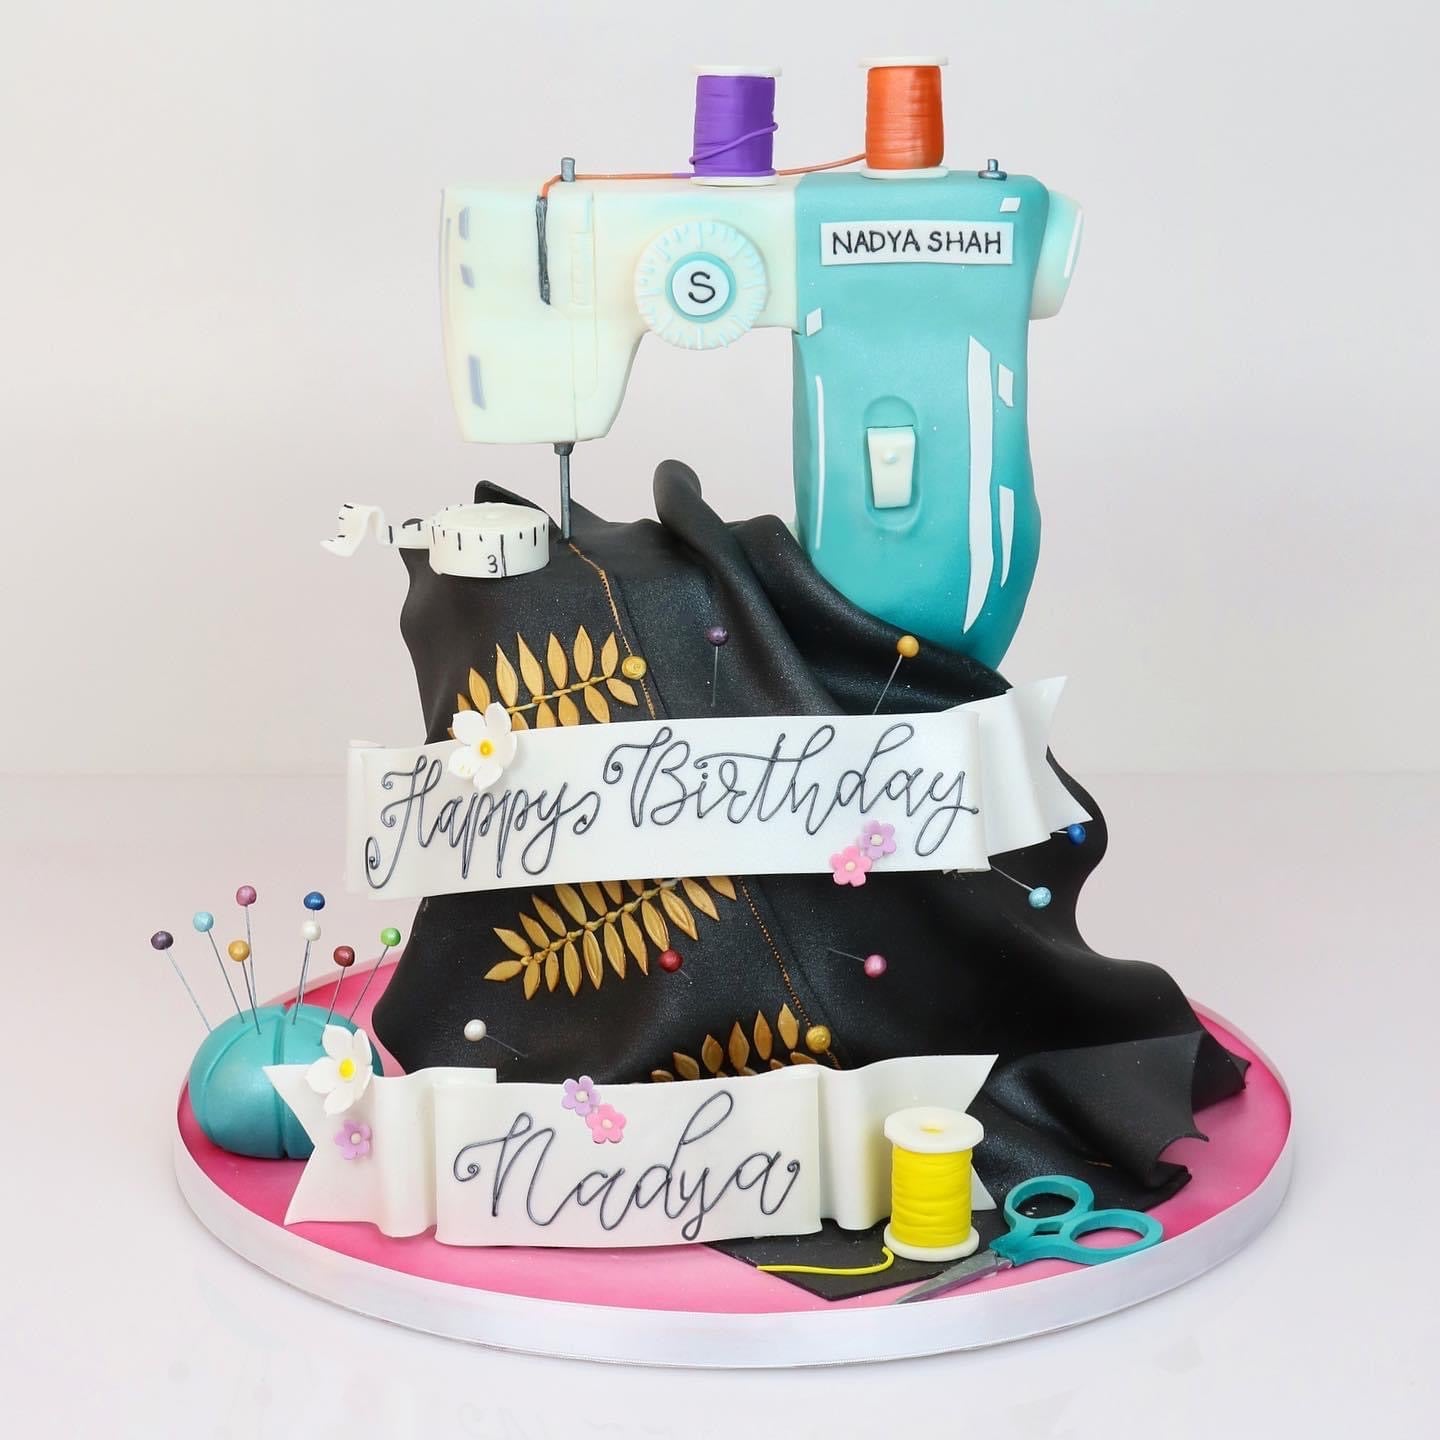 How to make a | Sewing Machine Cake - YouTube